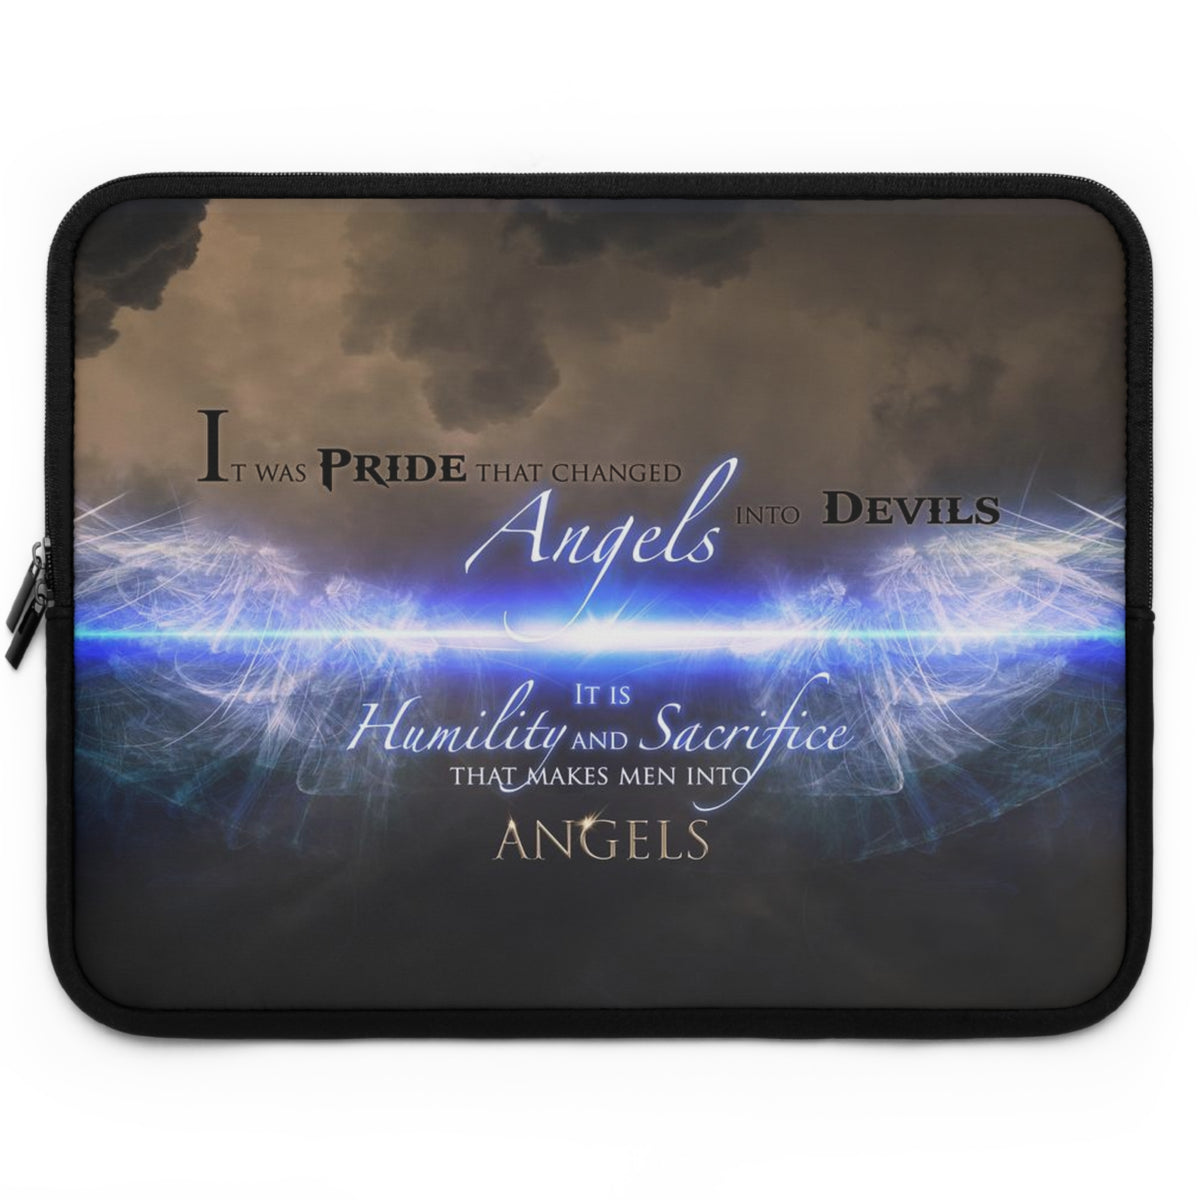 Men into Angels Laptop Sleeve